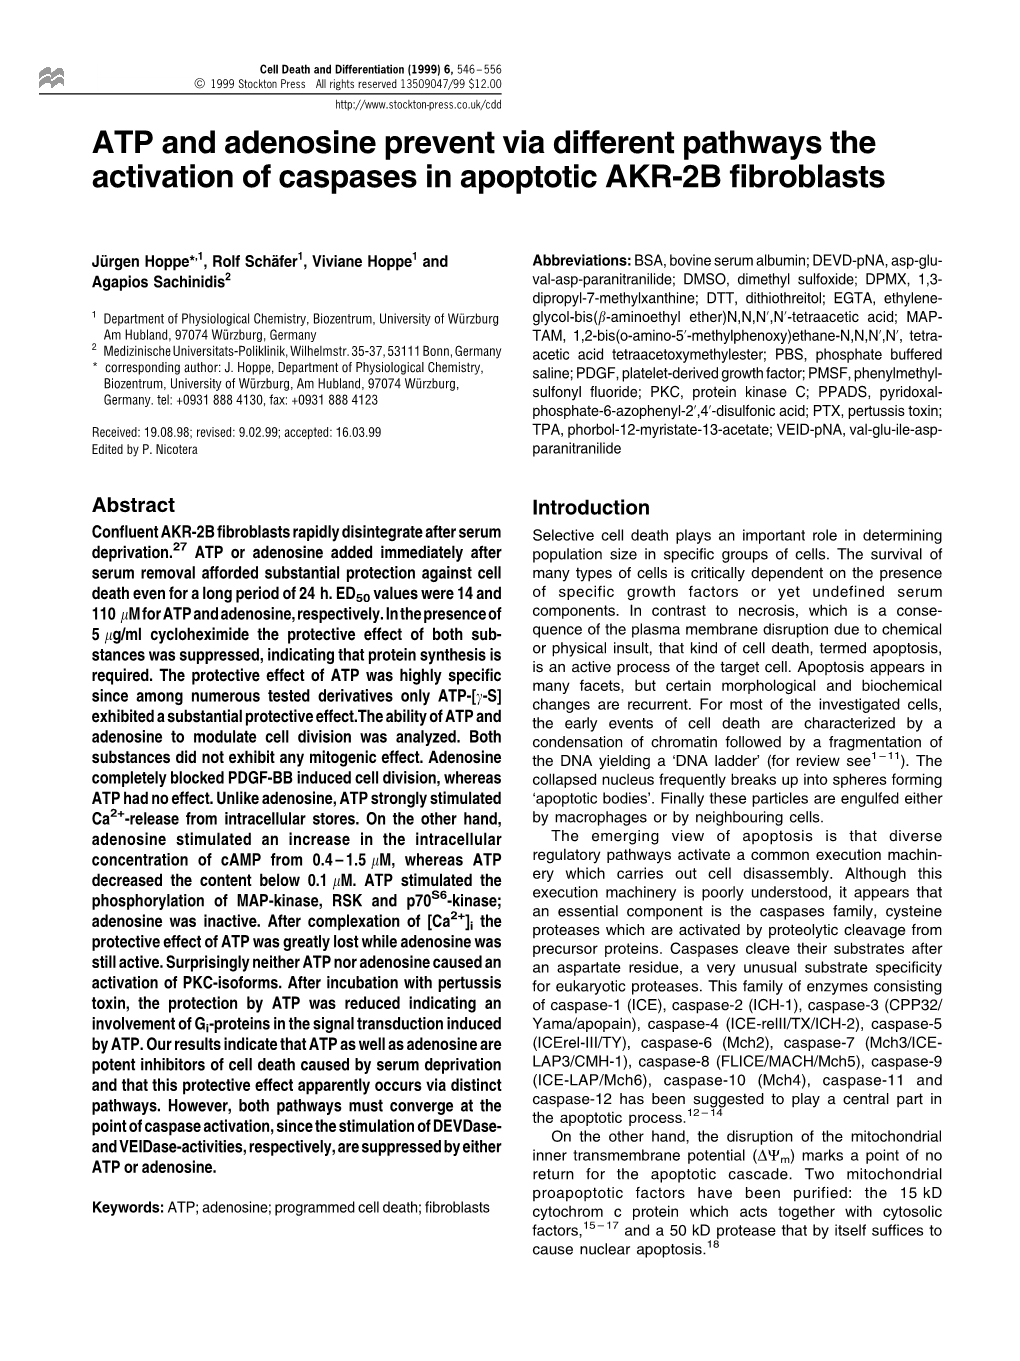 ATP and Adenosine Prevent Via Different Pathways the Activation of Caspases in Apoptotic AKR-2B Fibroblasts